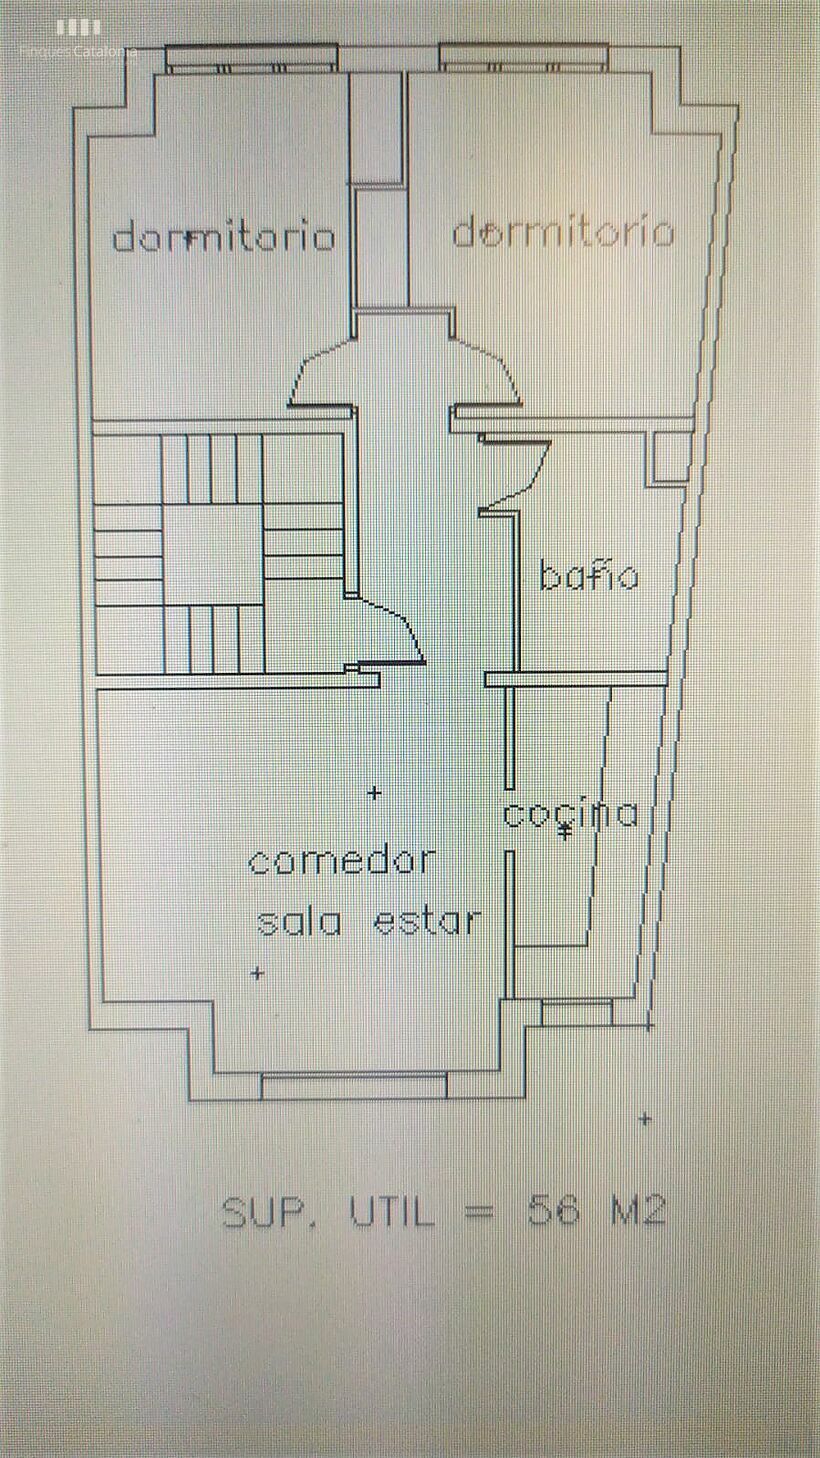 Two-bedroom apartment in Sant Joan de Palamós.